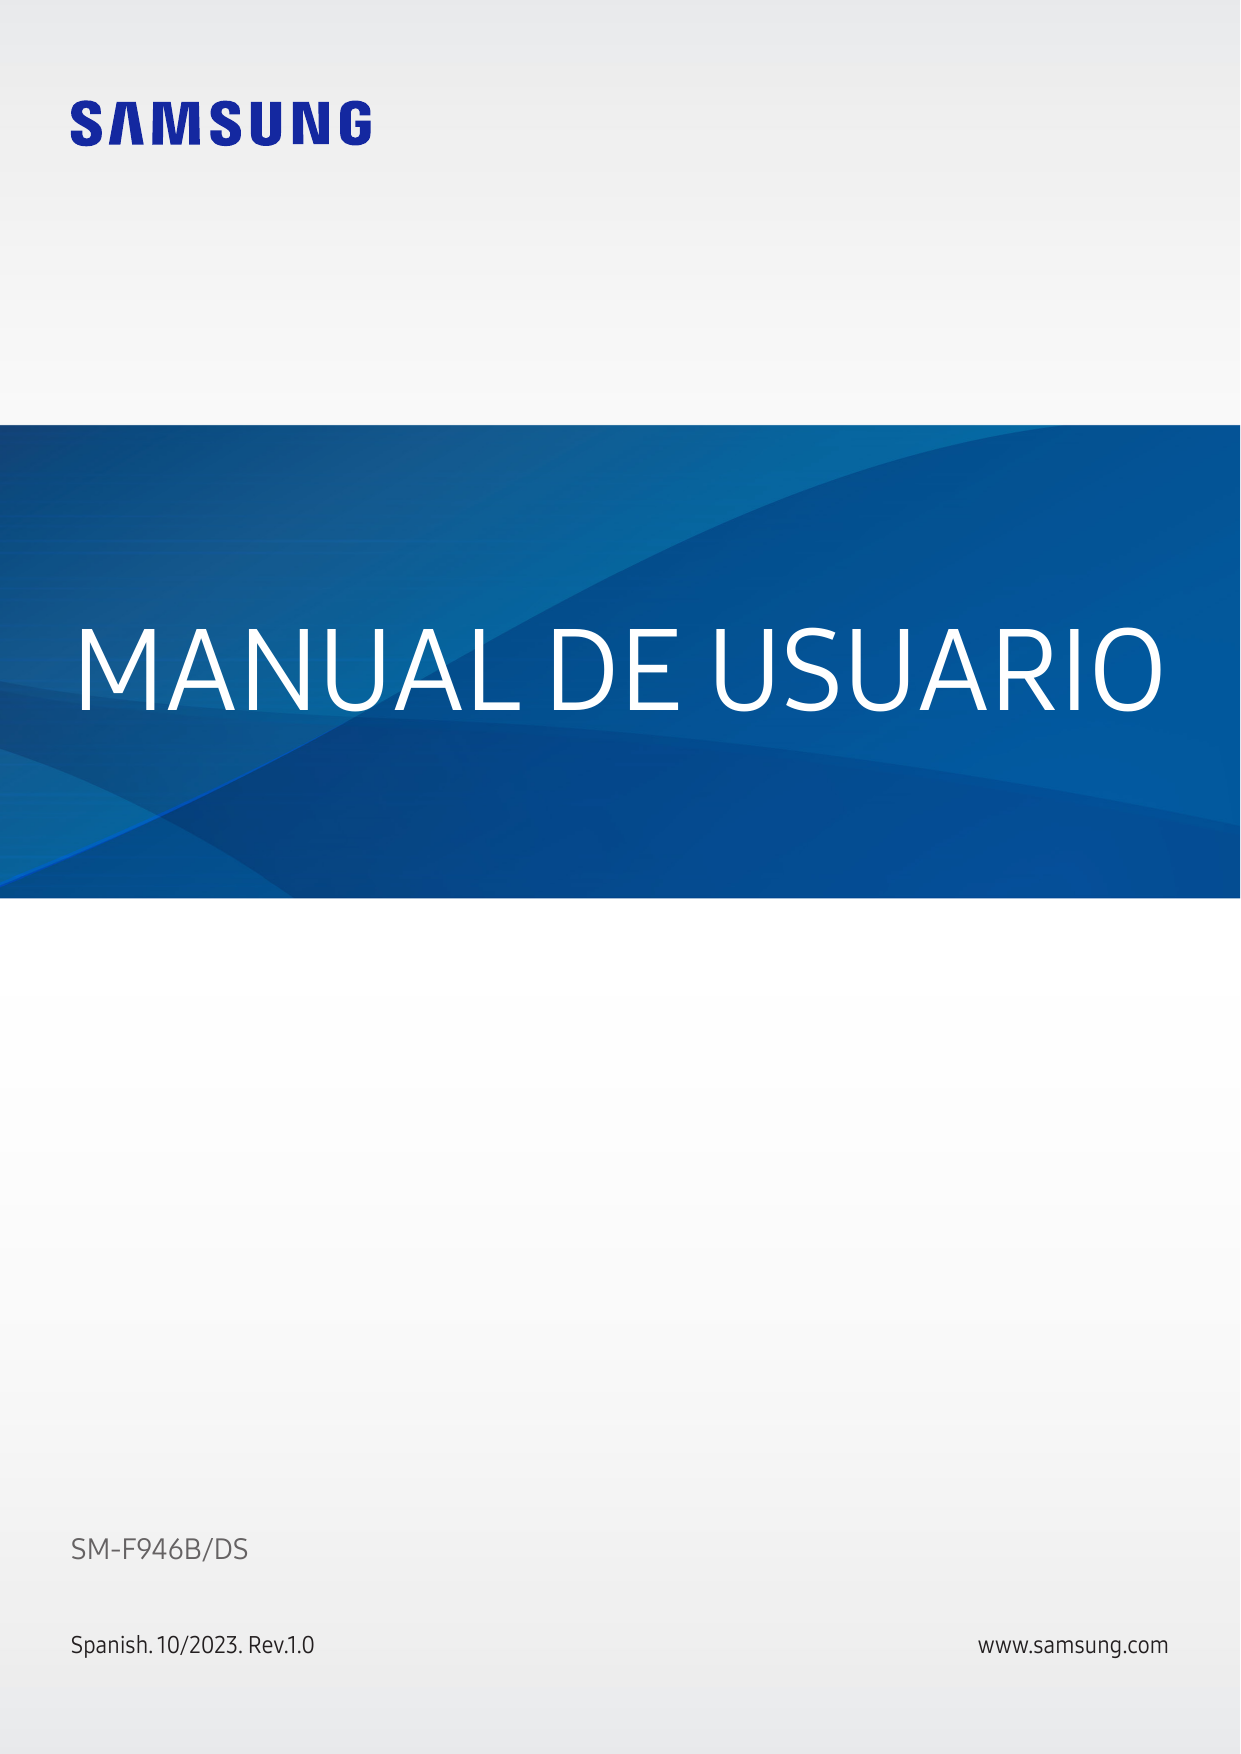 MANUAL DE USUARIOSM-F946B/DSSpanish. 10/2023. Rev.1.0www.samsung.com